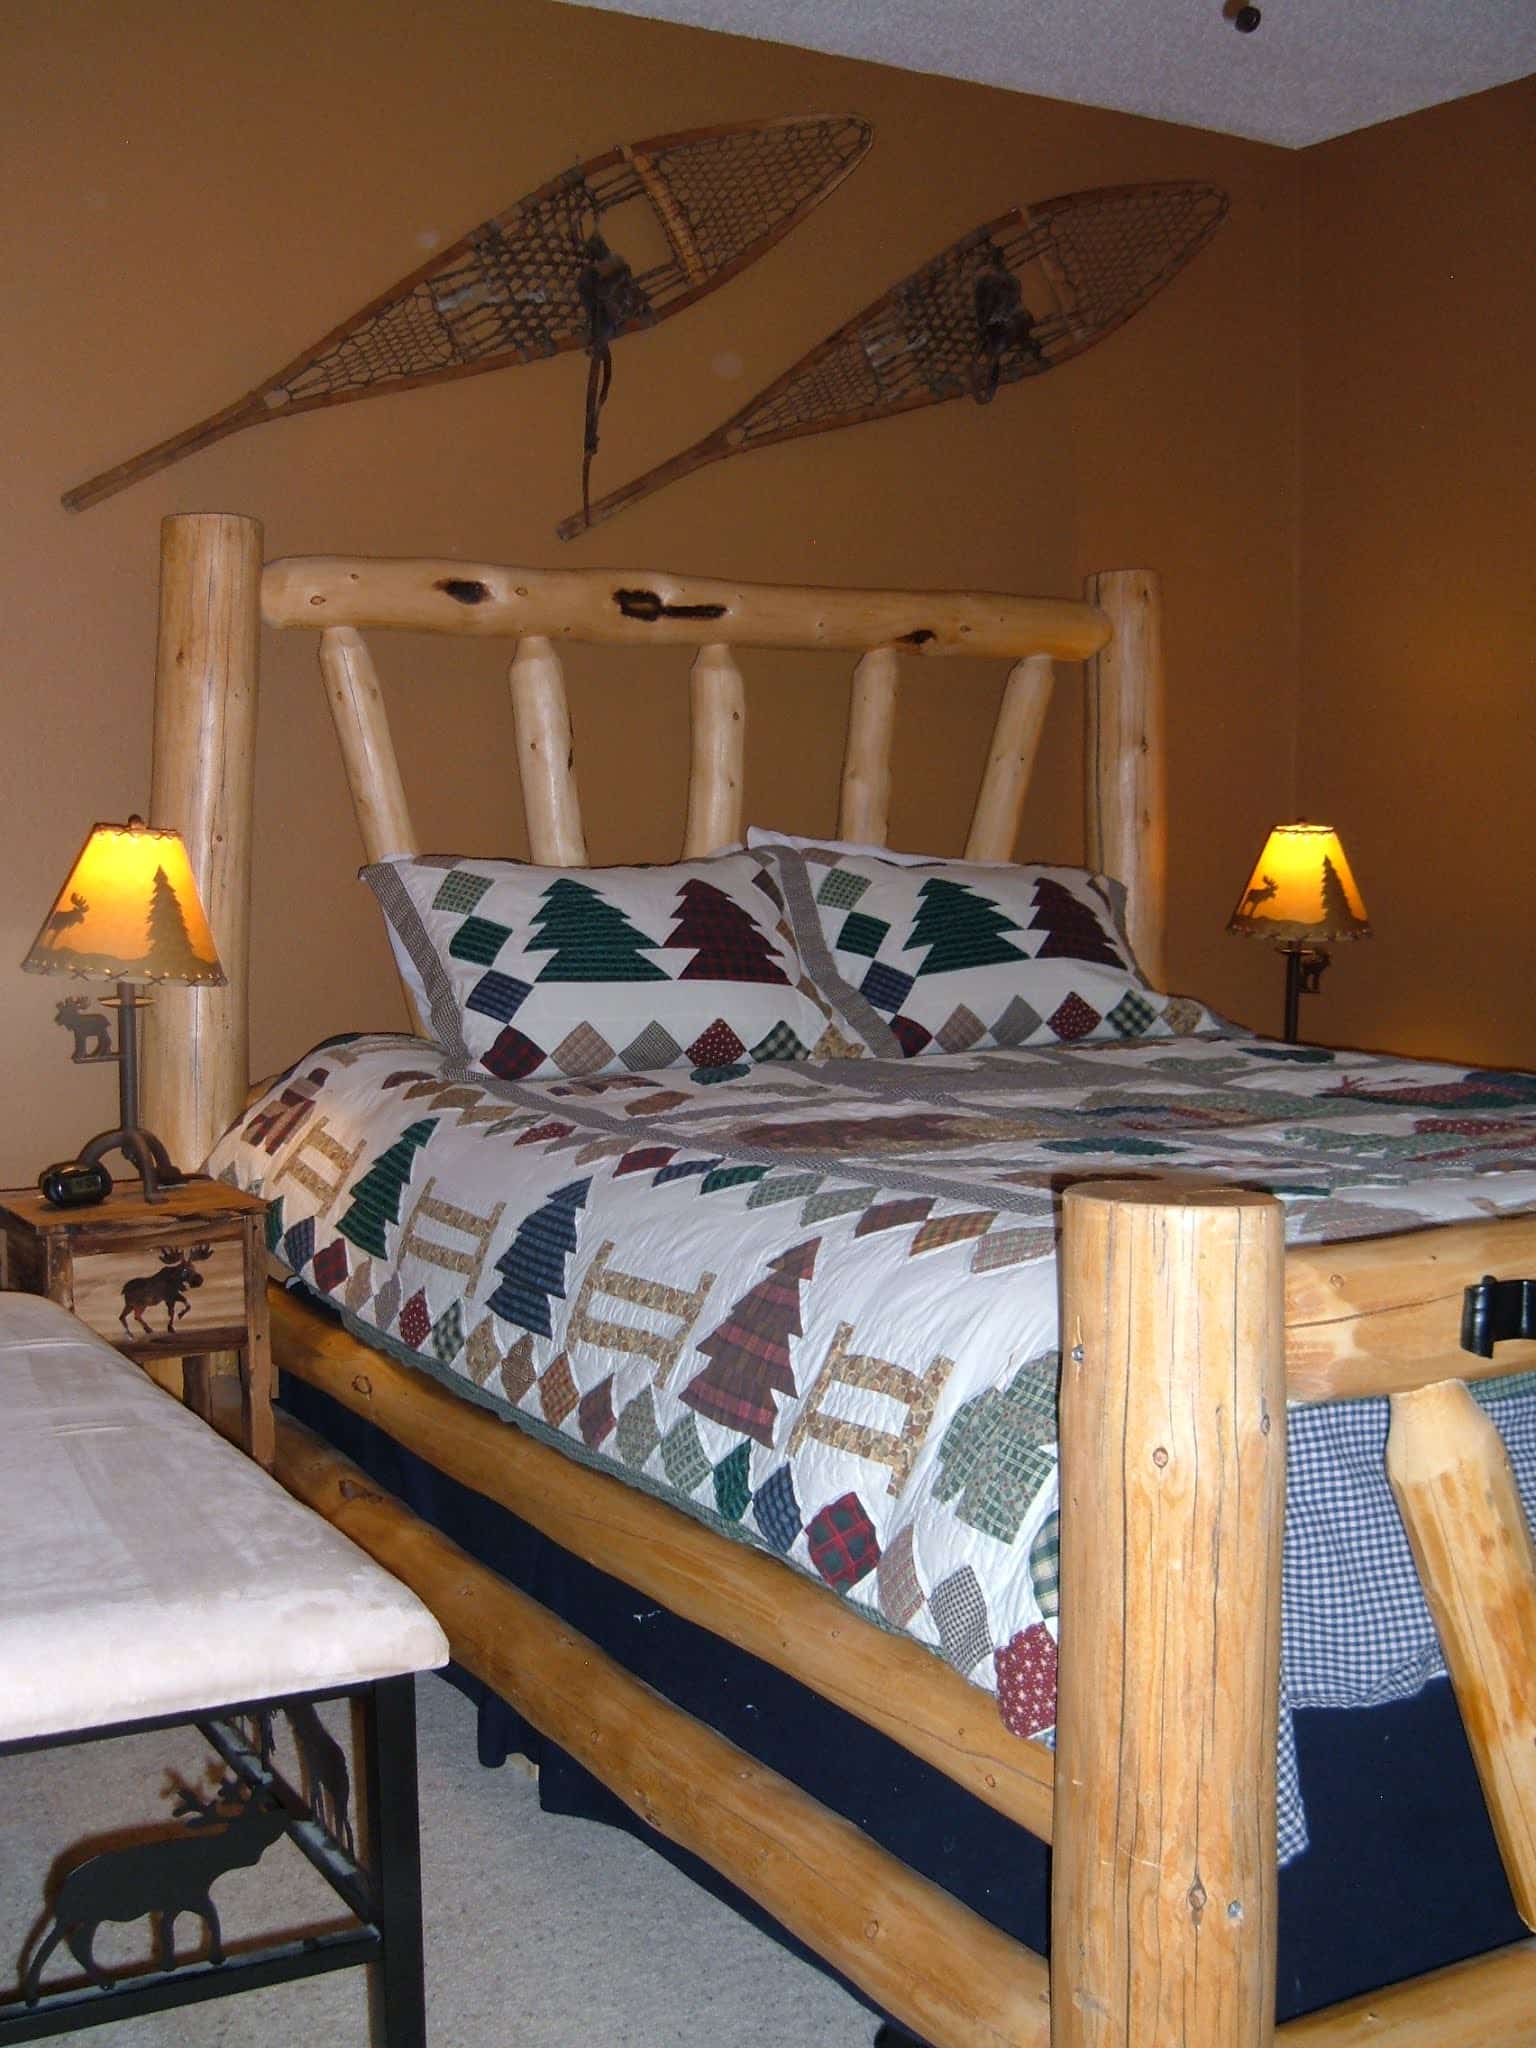 Interor bedroom with a log bed.